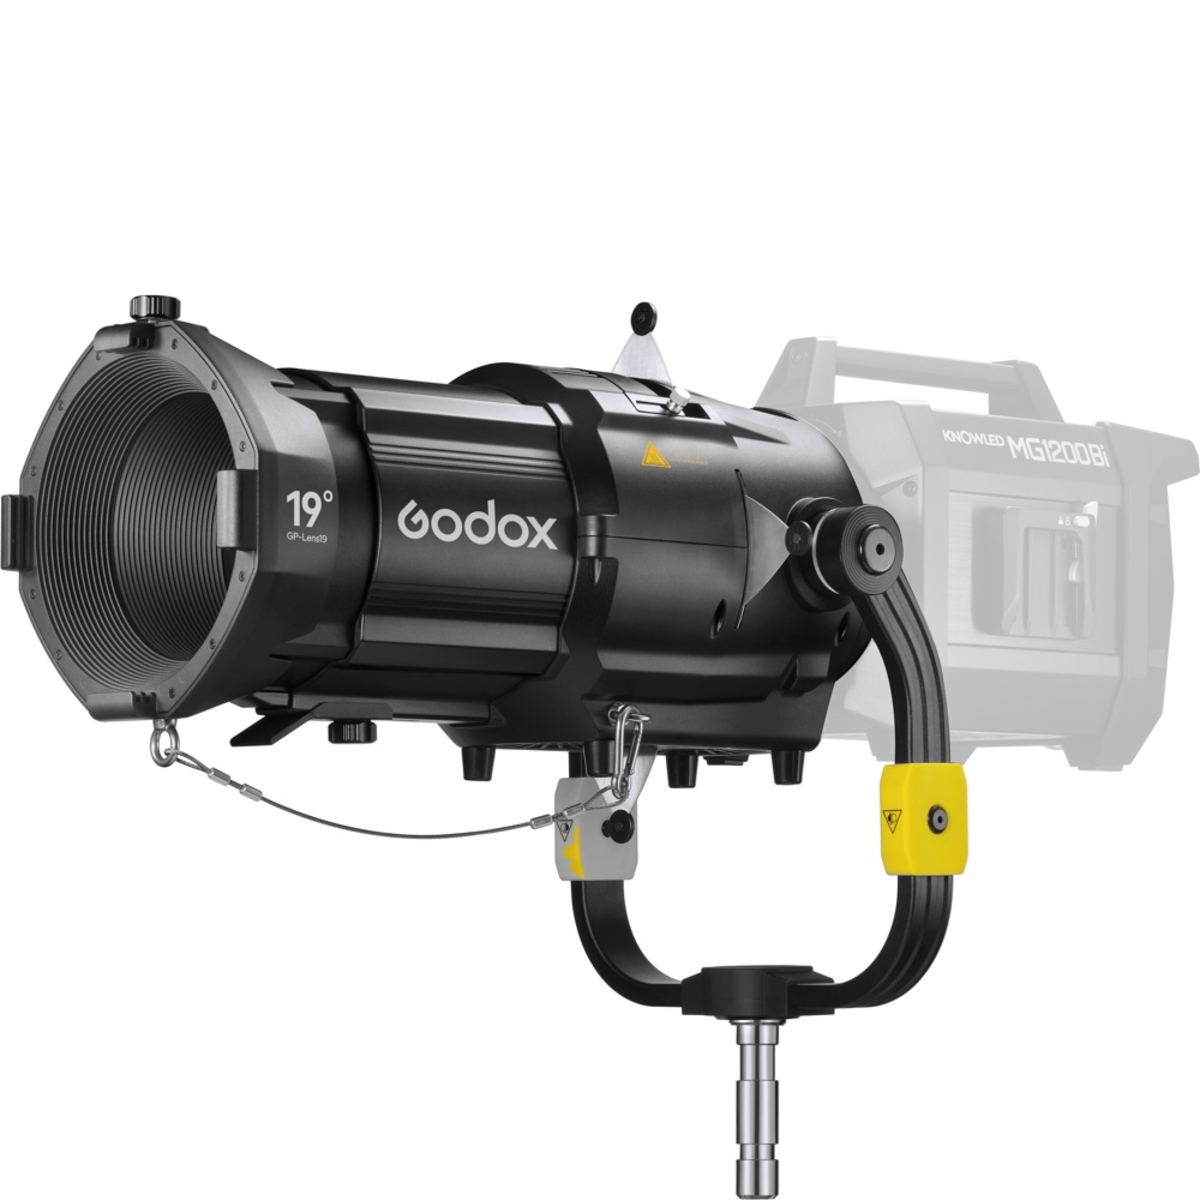 Godox GP19K Spotlight Attachment for KNOWLED MG1200Bi LED Light